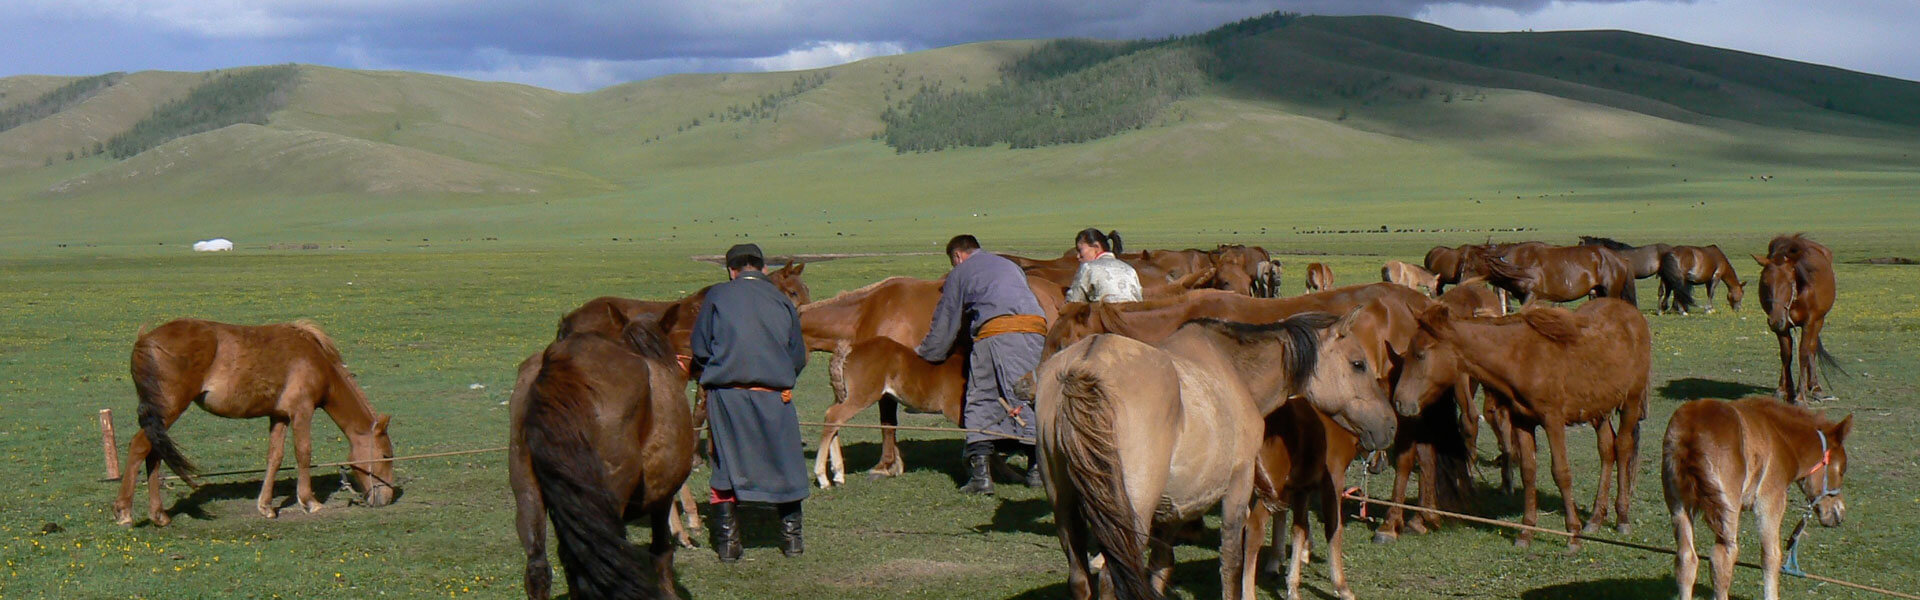 Mongolie Altai Adelaars Festival reis